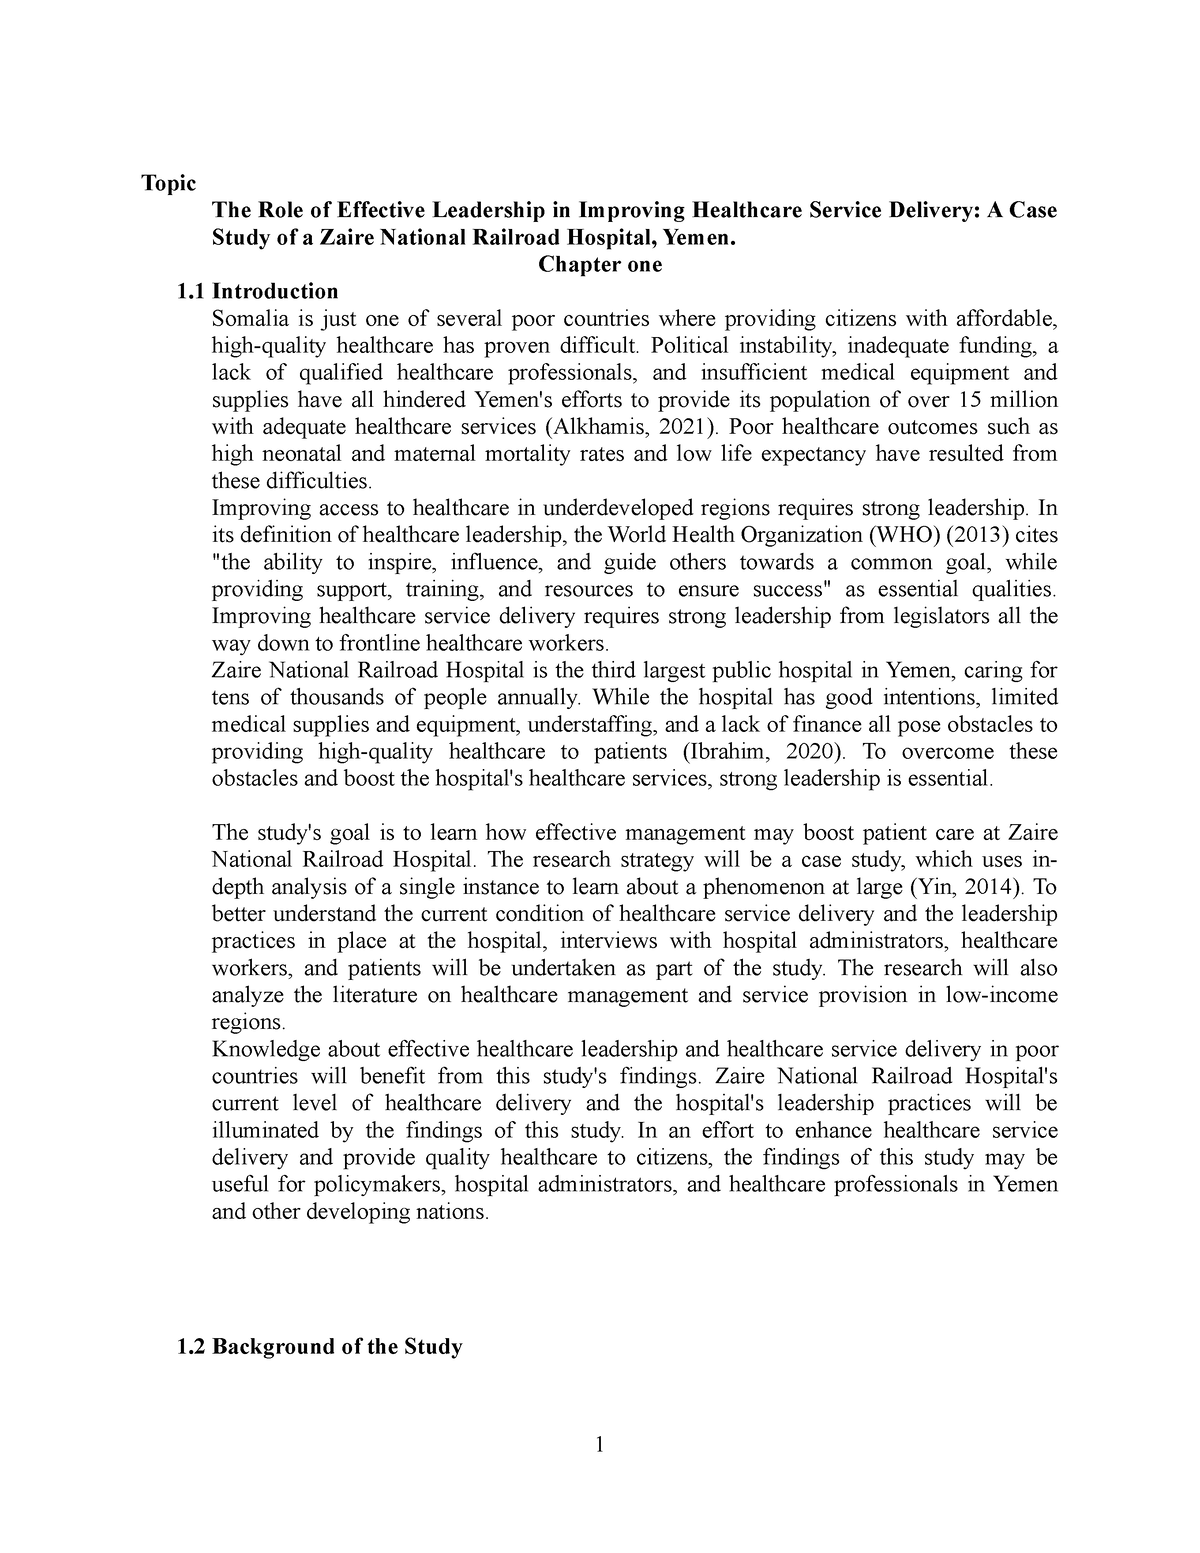 dissertation public health pdf